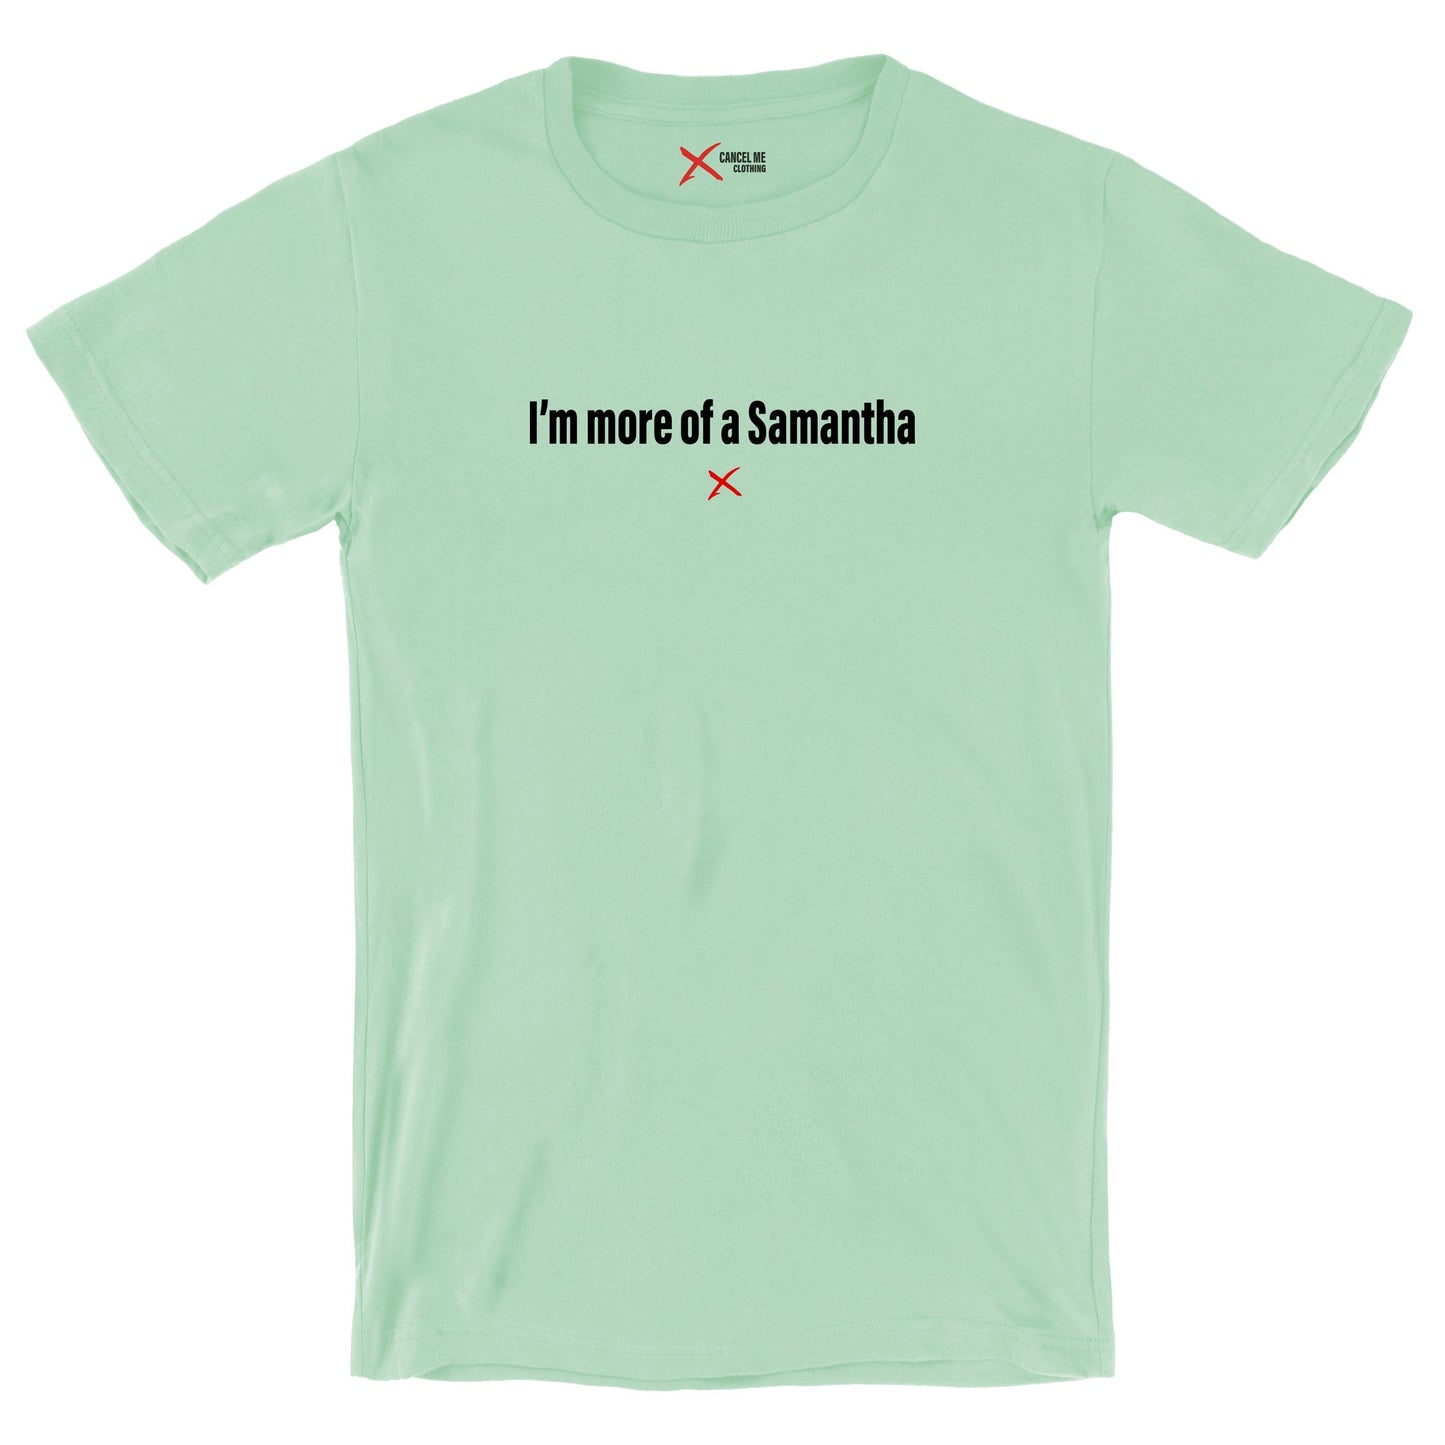 I'm more of a Samantha - Shirt